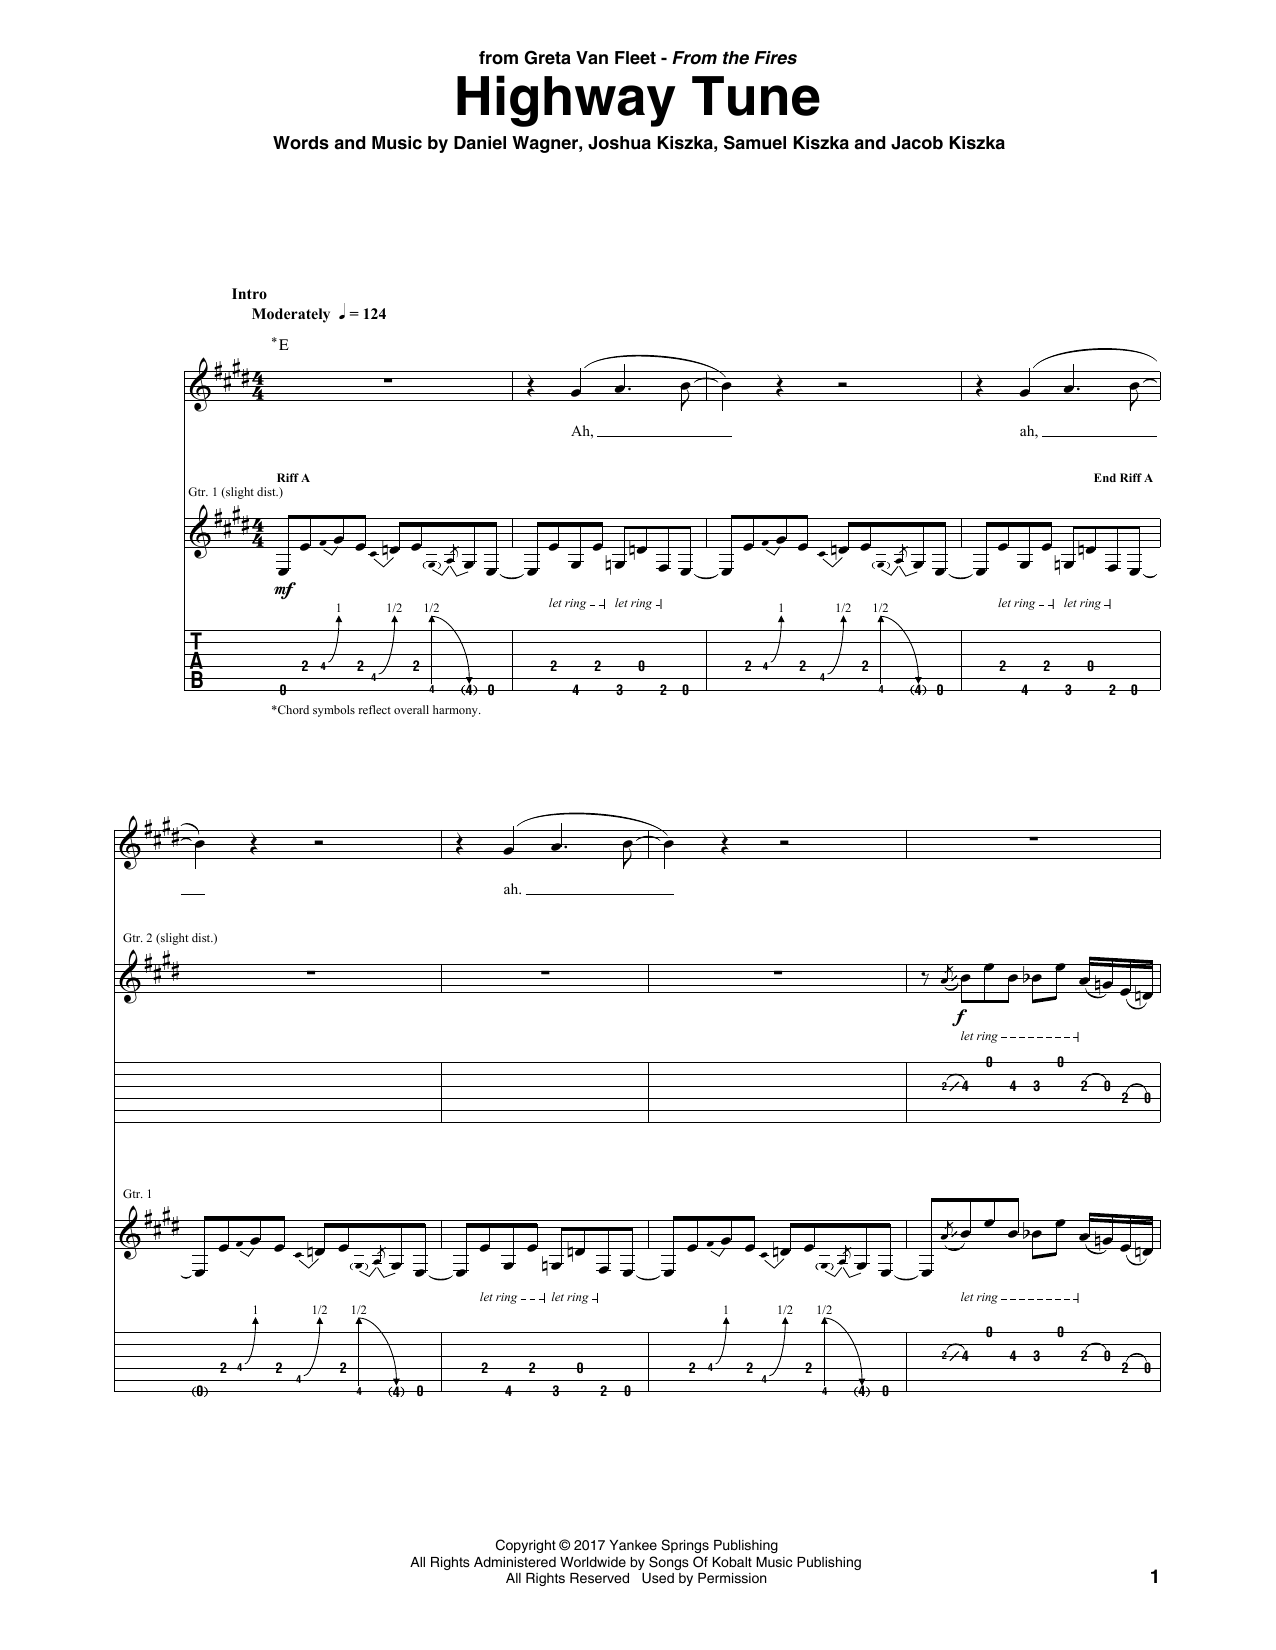 Greta Van Fleet Highway Tune Sheet Music Notes & Chords for Guitar Tab - Download or Print PDF